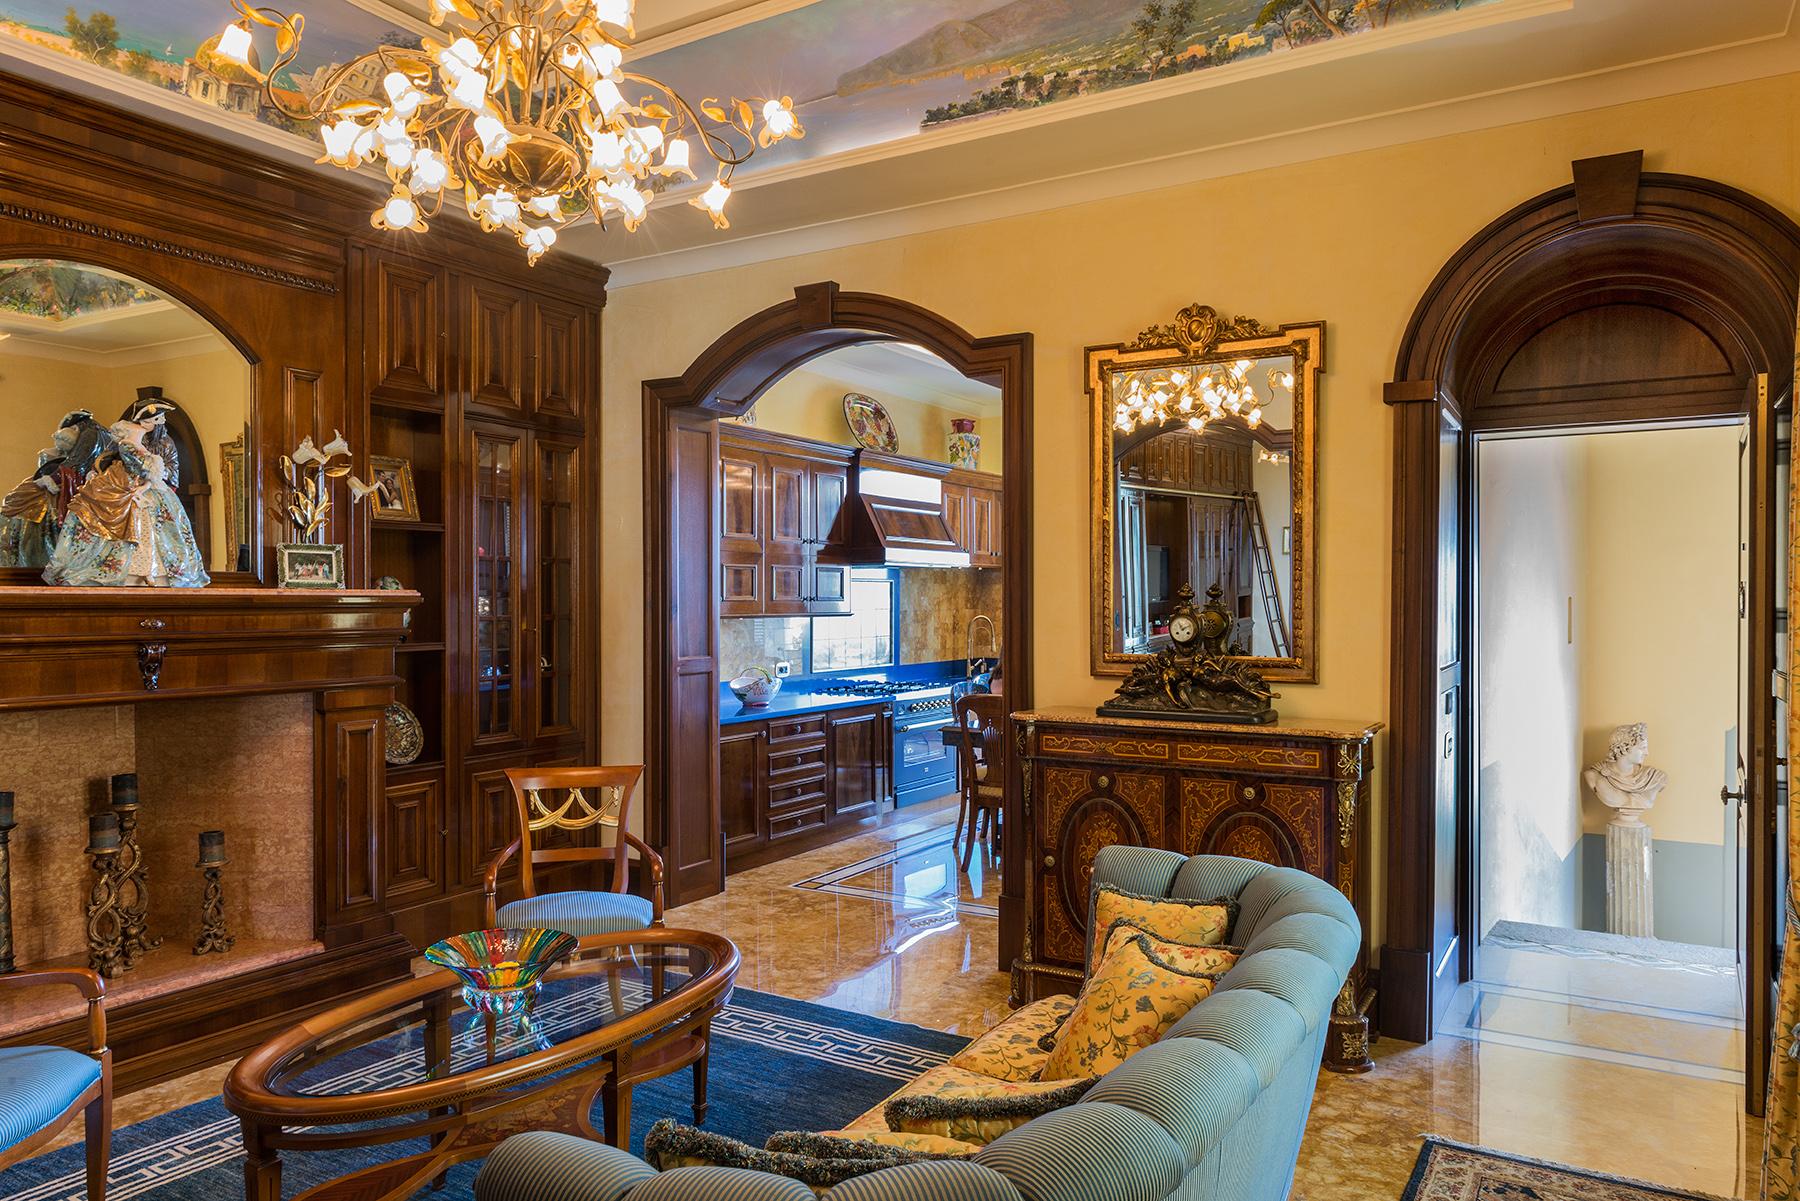                                                     Spectacular apartment in the center of Sorrento, Amalfi Coast                                                     - 8